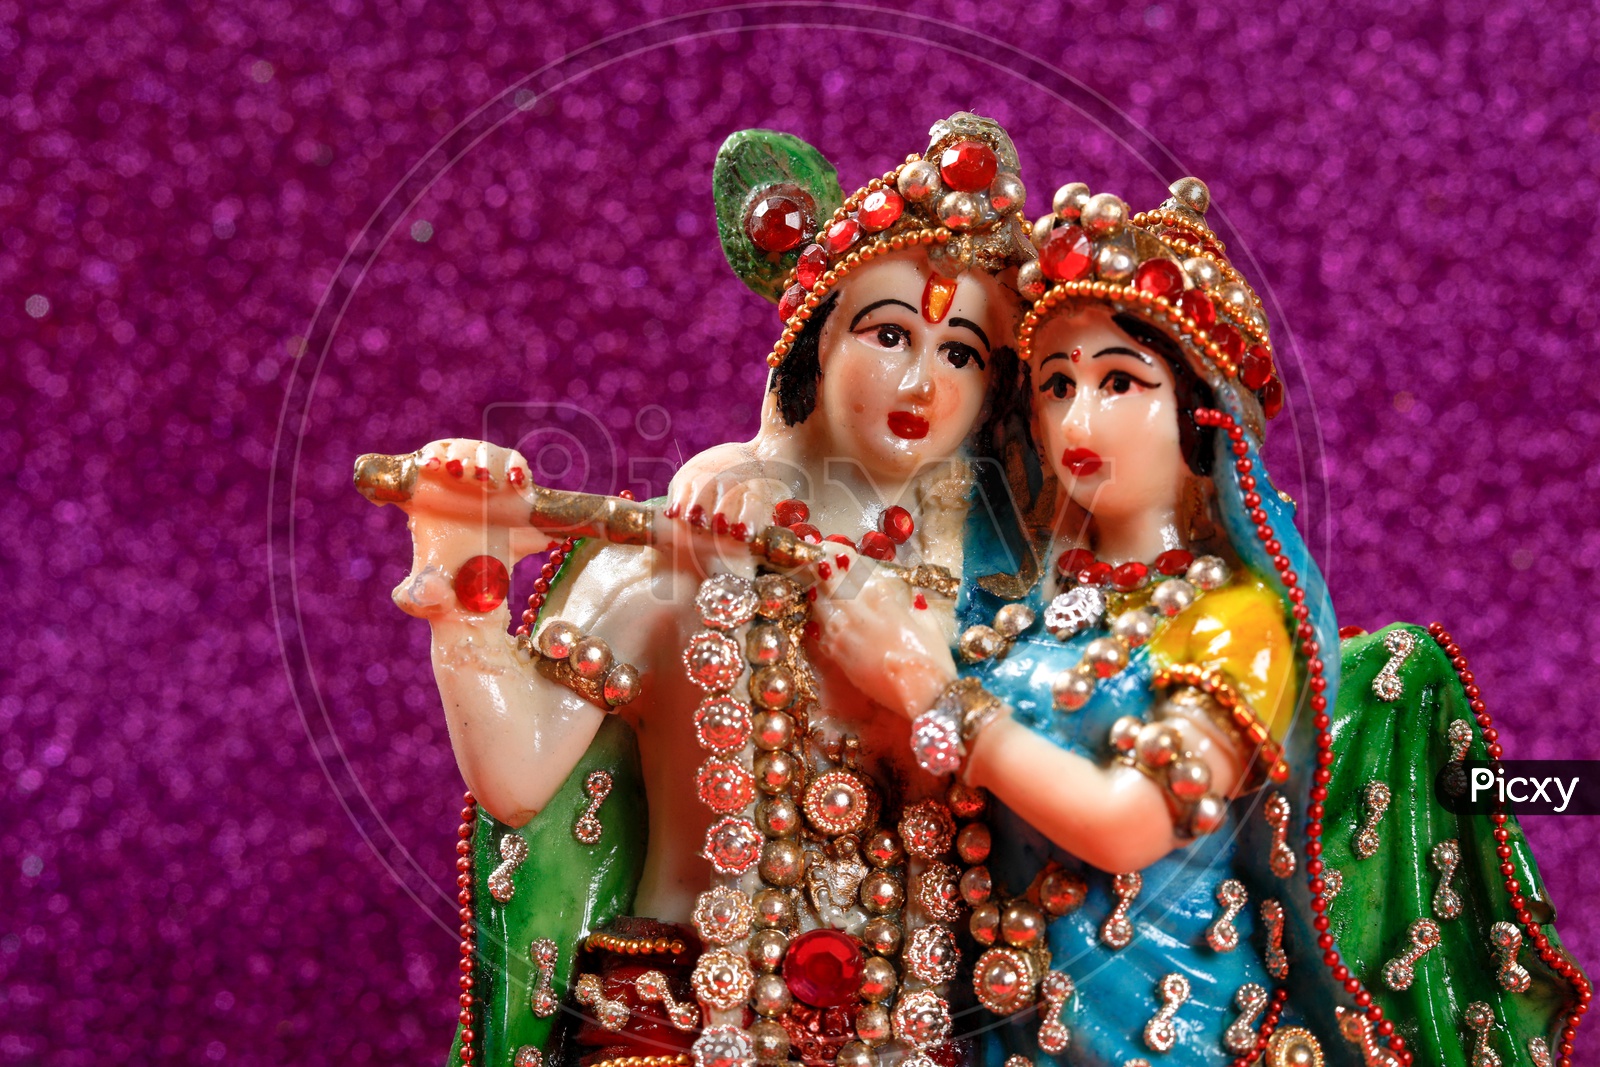 Radha Krishna Idol and beautiful pink background / Lord Sri Krishna Idol